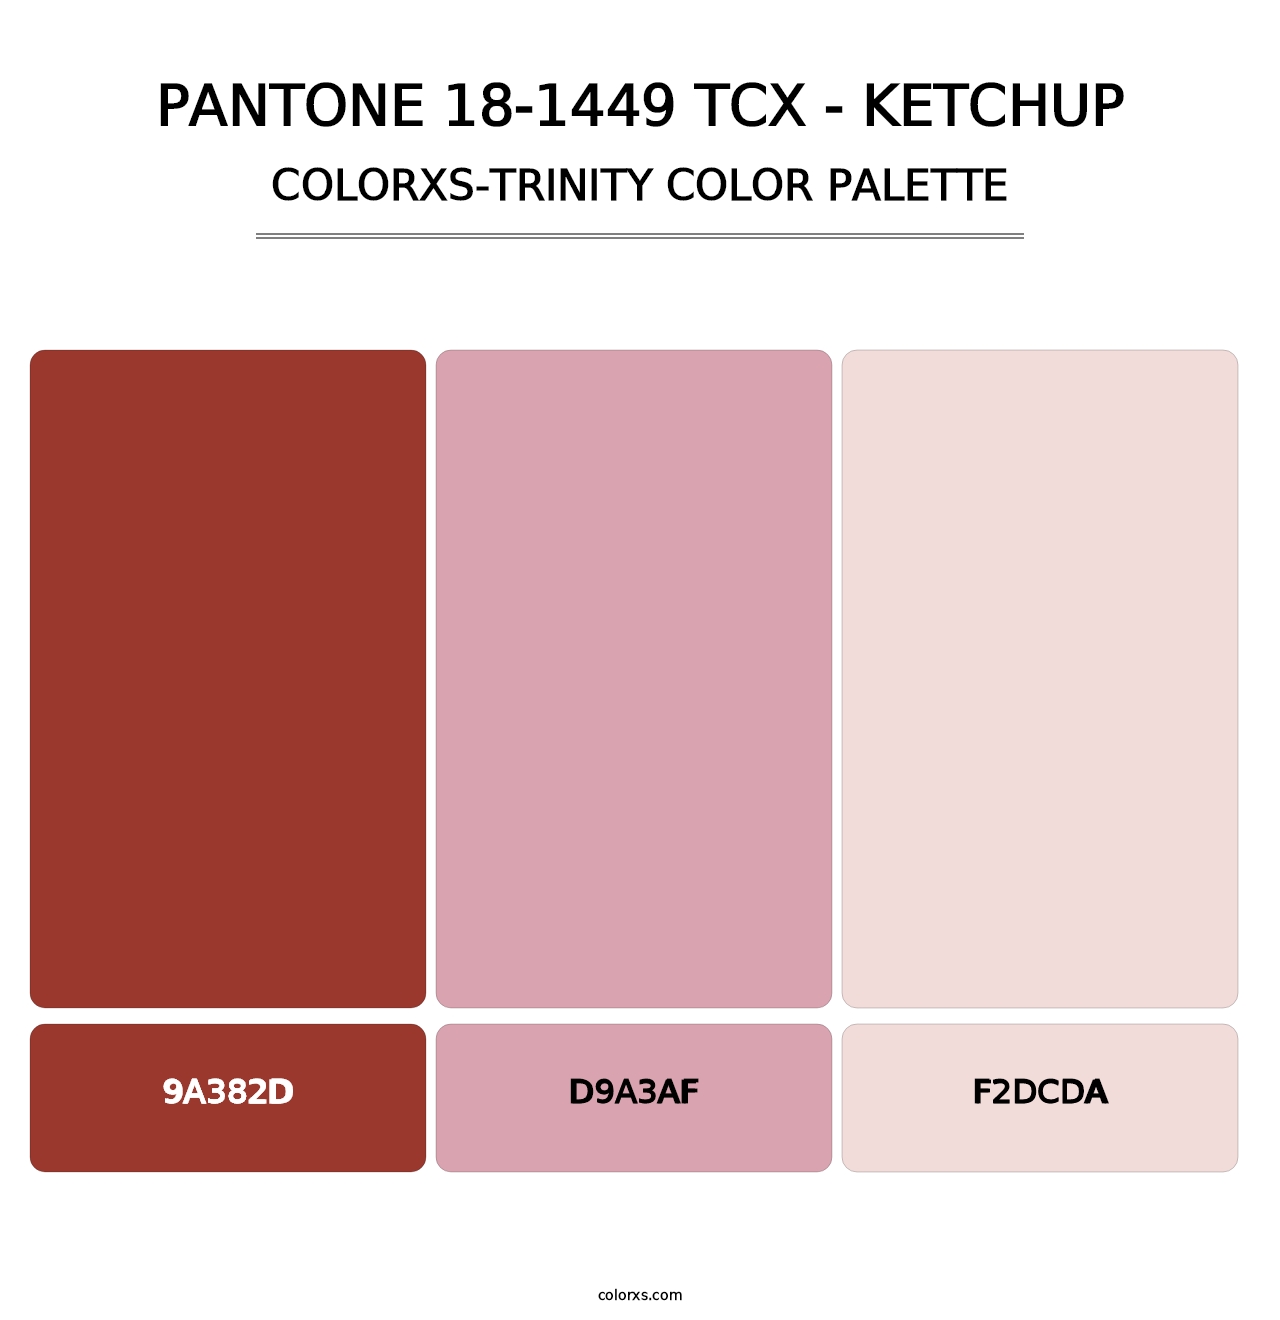 PANTONE 18-1449 TCX - Ketchup - Colorxs Trinity Palette